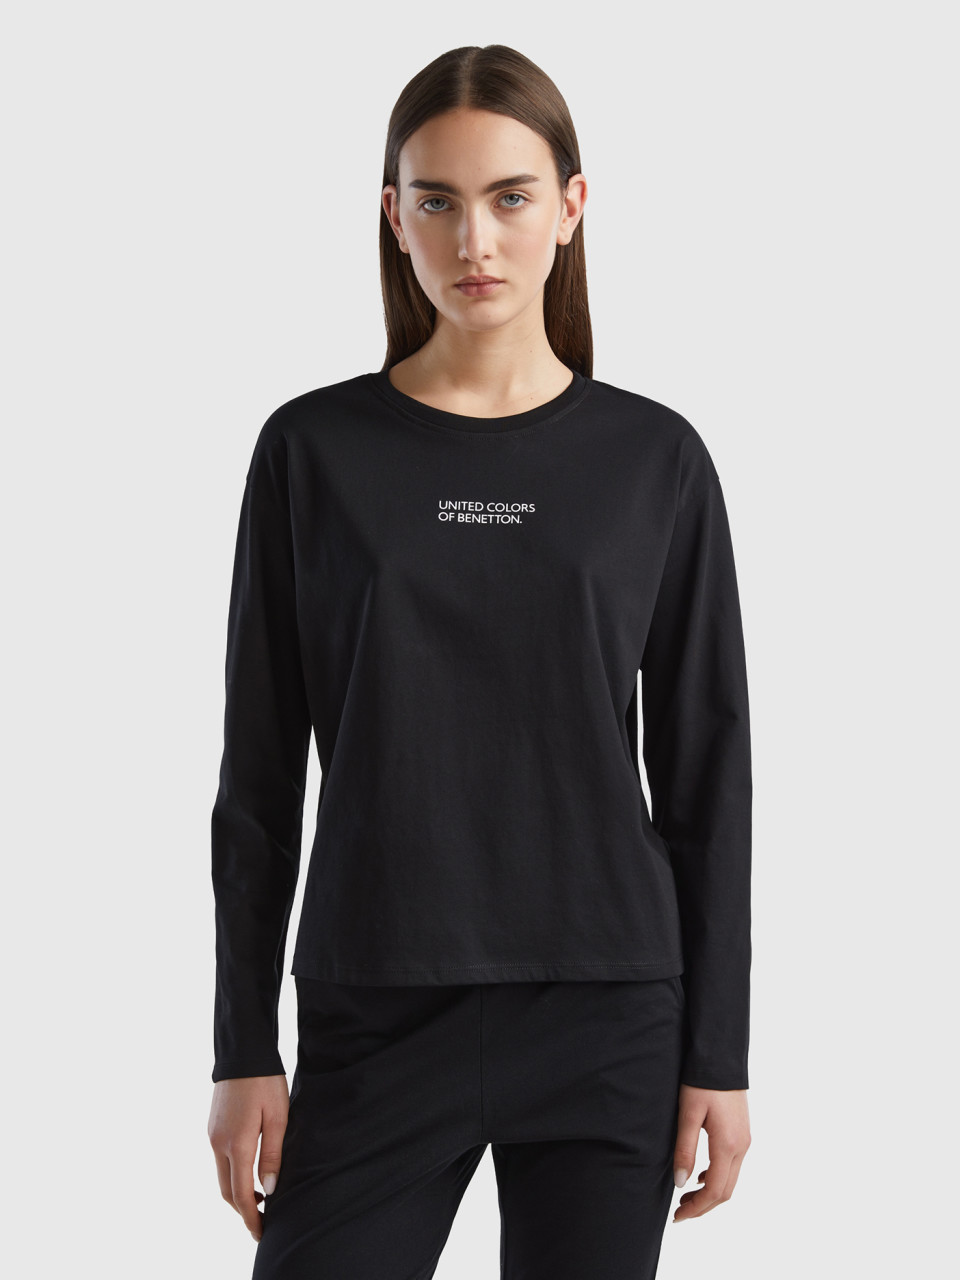 Benetton, Camiseta Con Estampado De Logotipo, Negro, Mujer